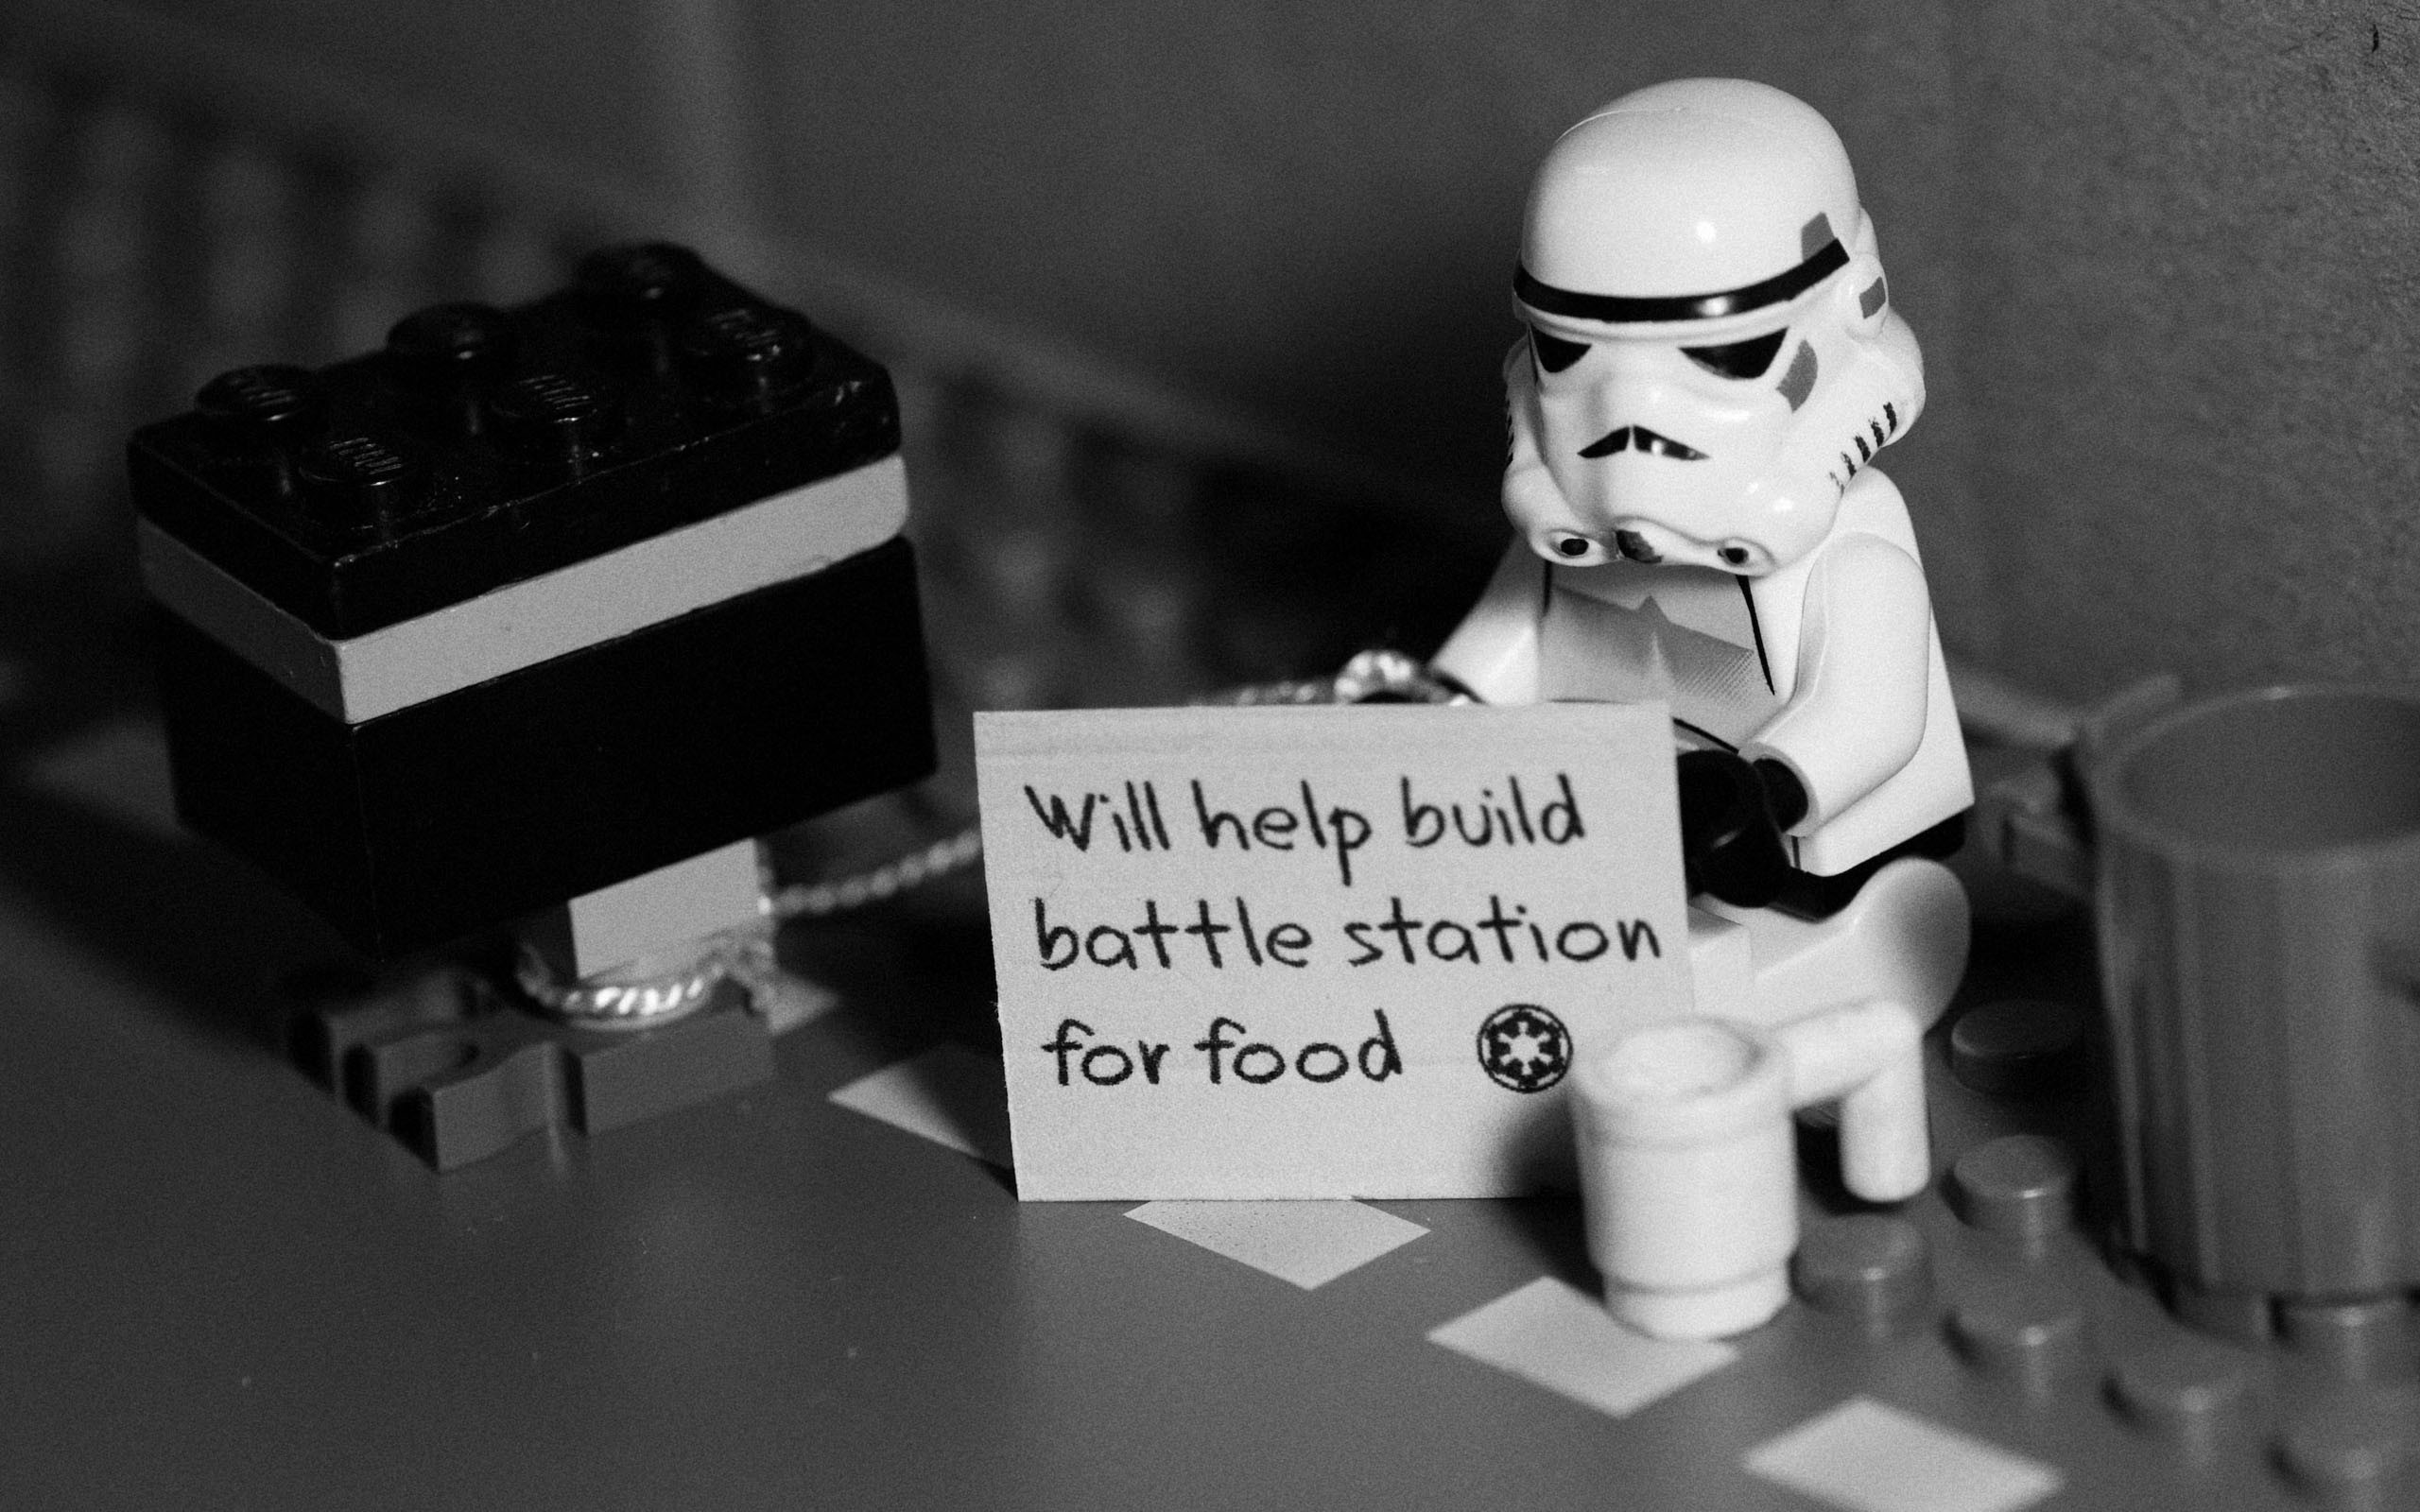 General 2560x1600 humor LEGO monochrome Star Wars stormtrooper toys Star Wars Humor helmet Star Wars Droids figurines movie characters